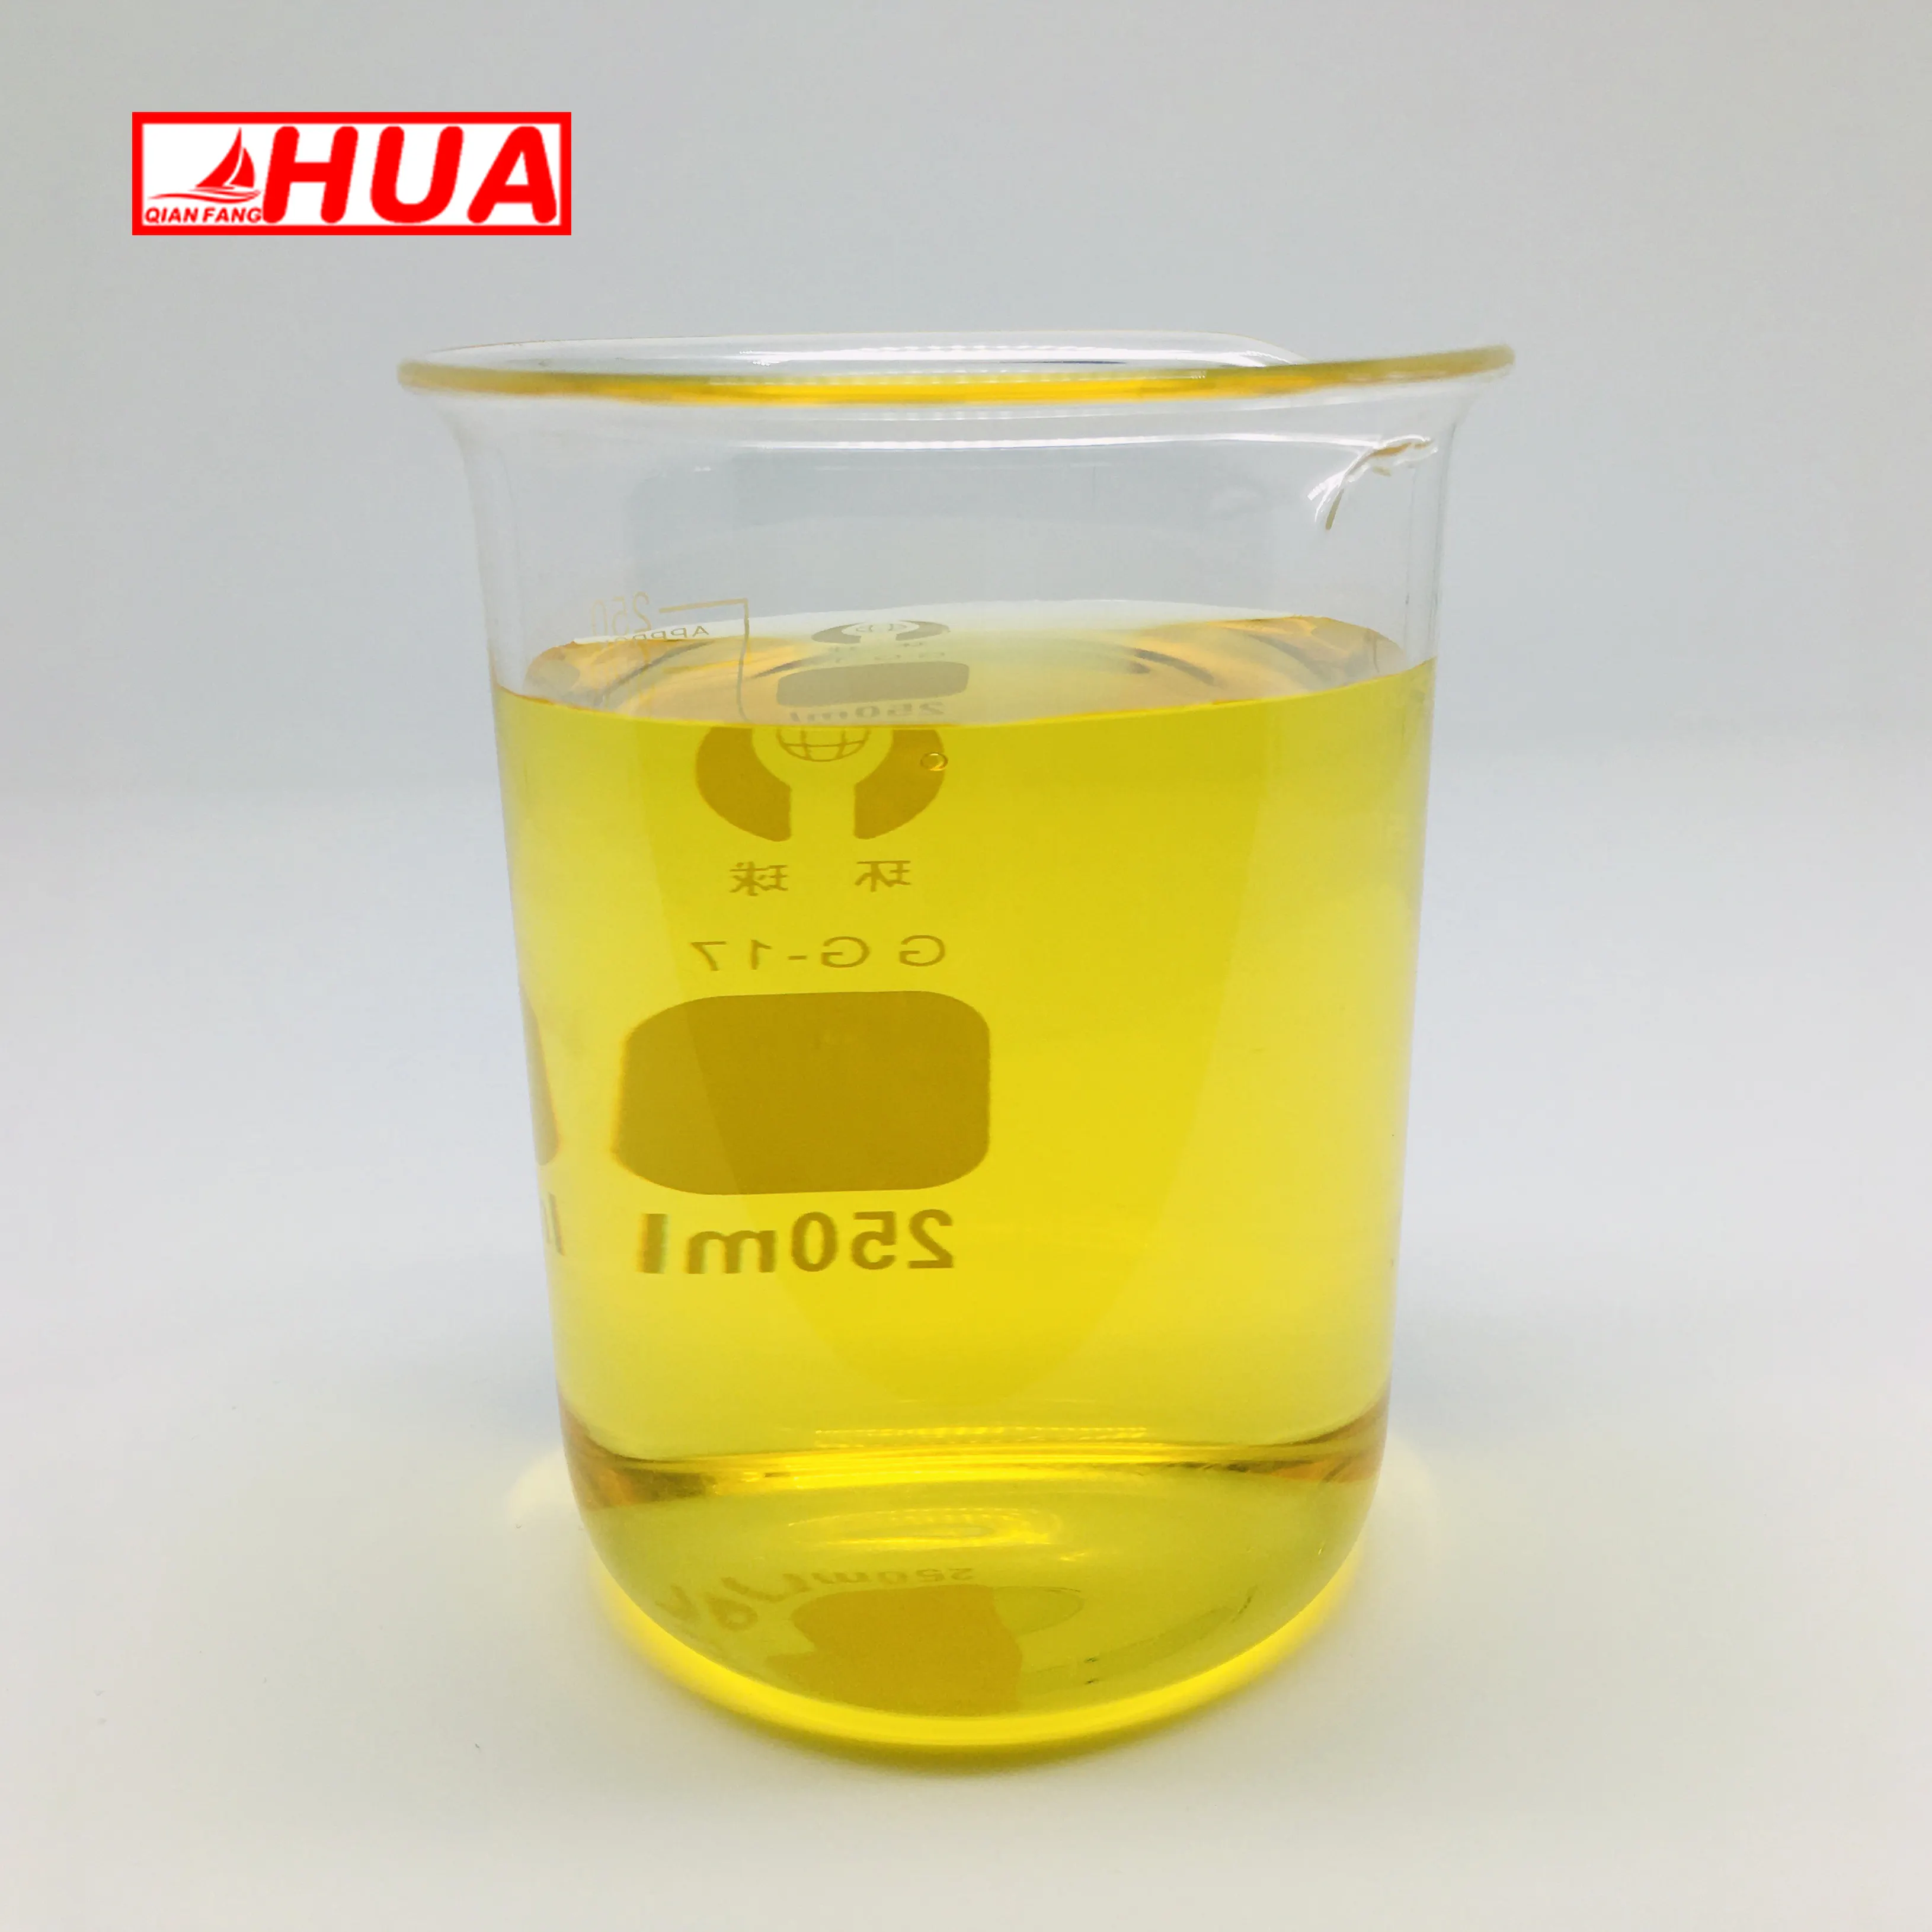 HUA Vitamin E Öl kosmetikqualität Tocopherol CAS 59-02-9 Dl-Alpha-Tocopheryl-Acetat